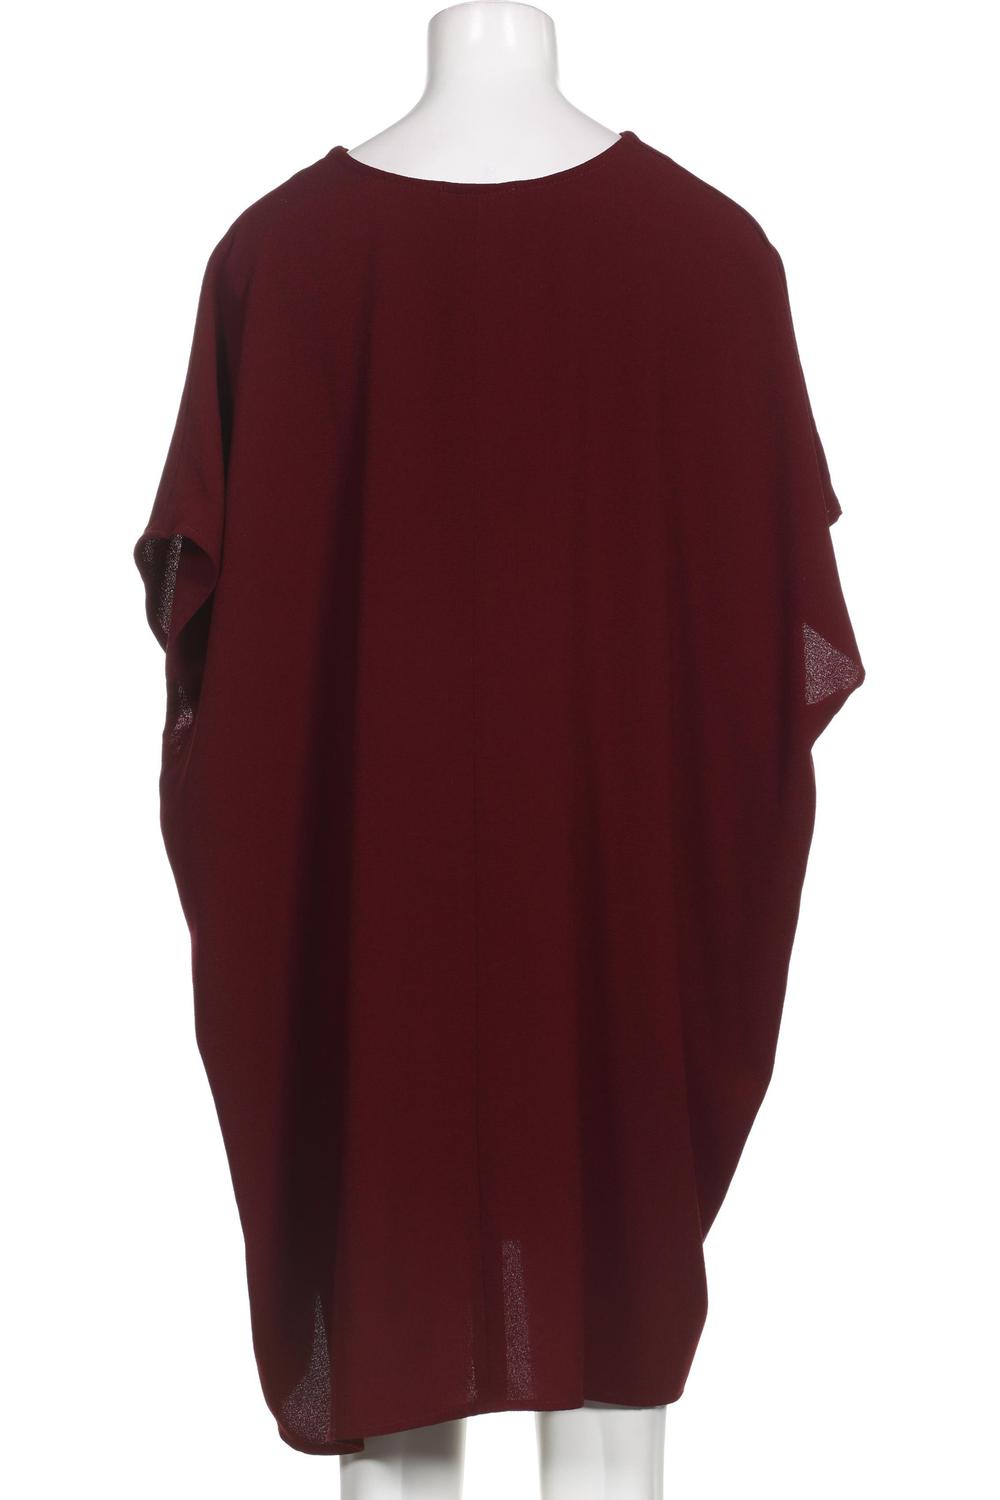 American Apparel Damen Kleid INT XS Second Hand kaufen ...